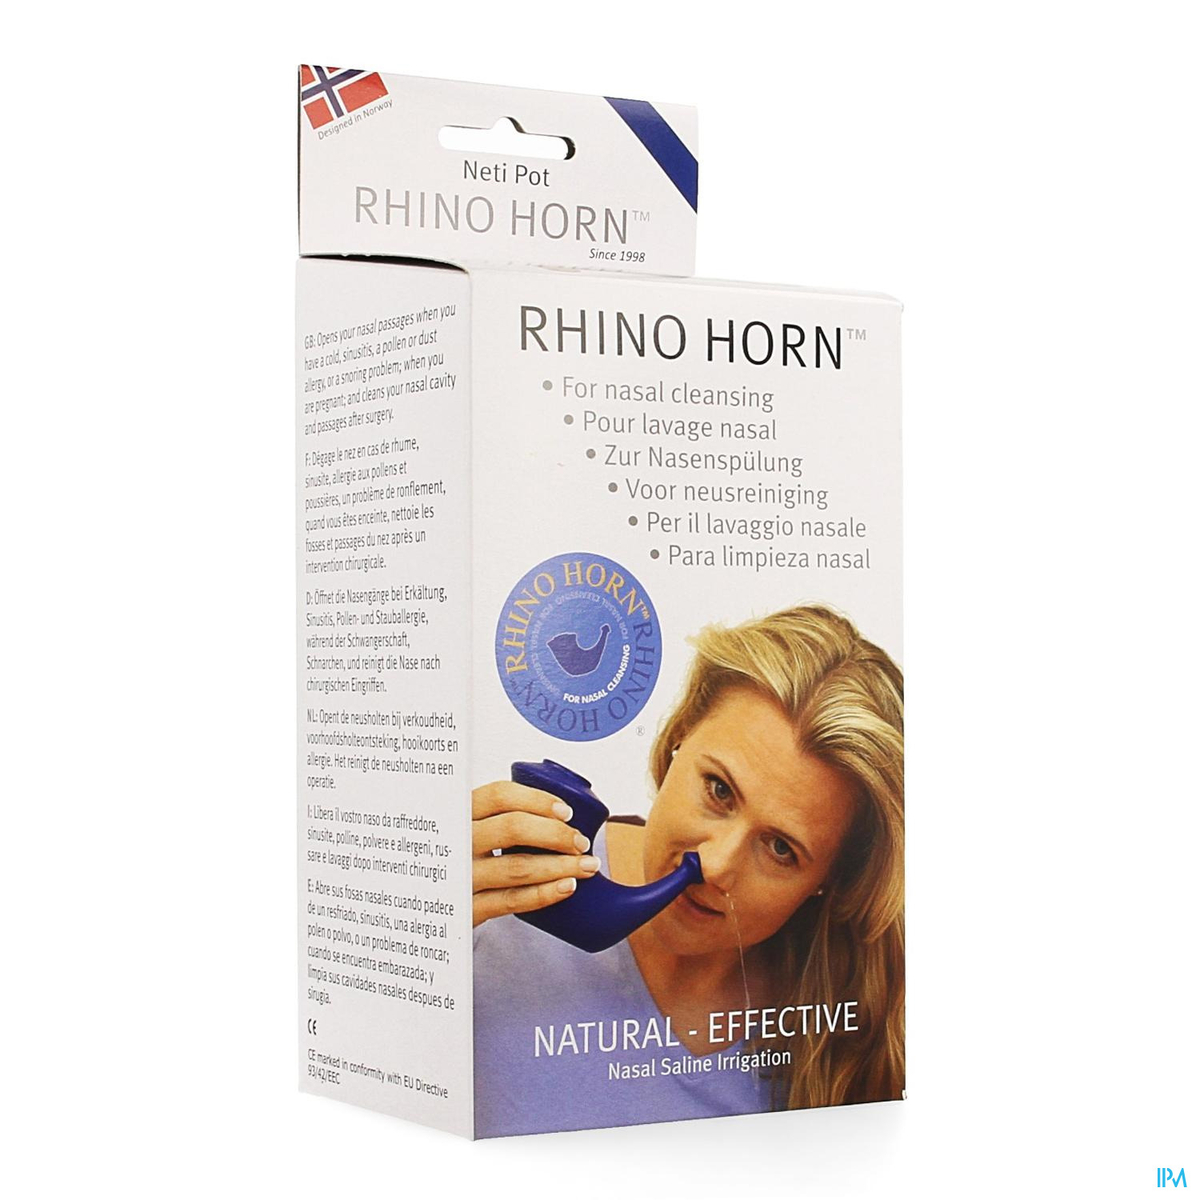 Rhino Horn Junior pour lavage de nez - Allergie respiratoire, rhume